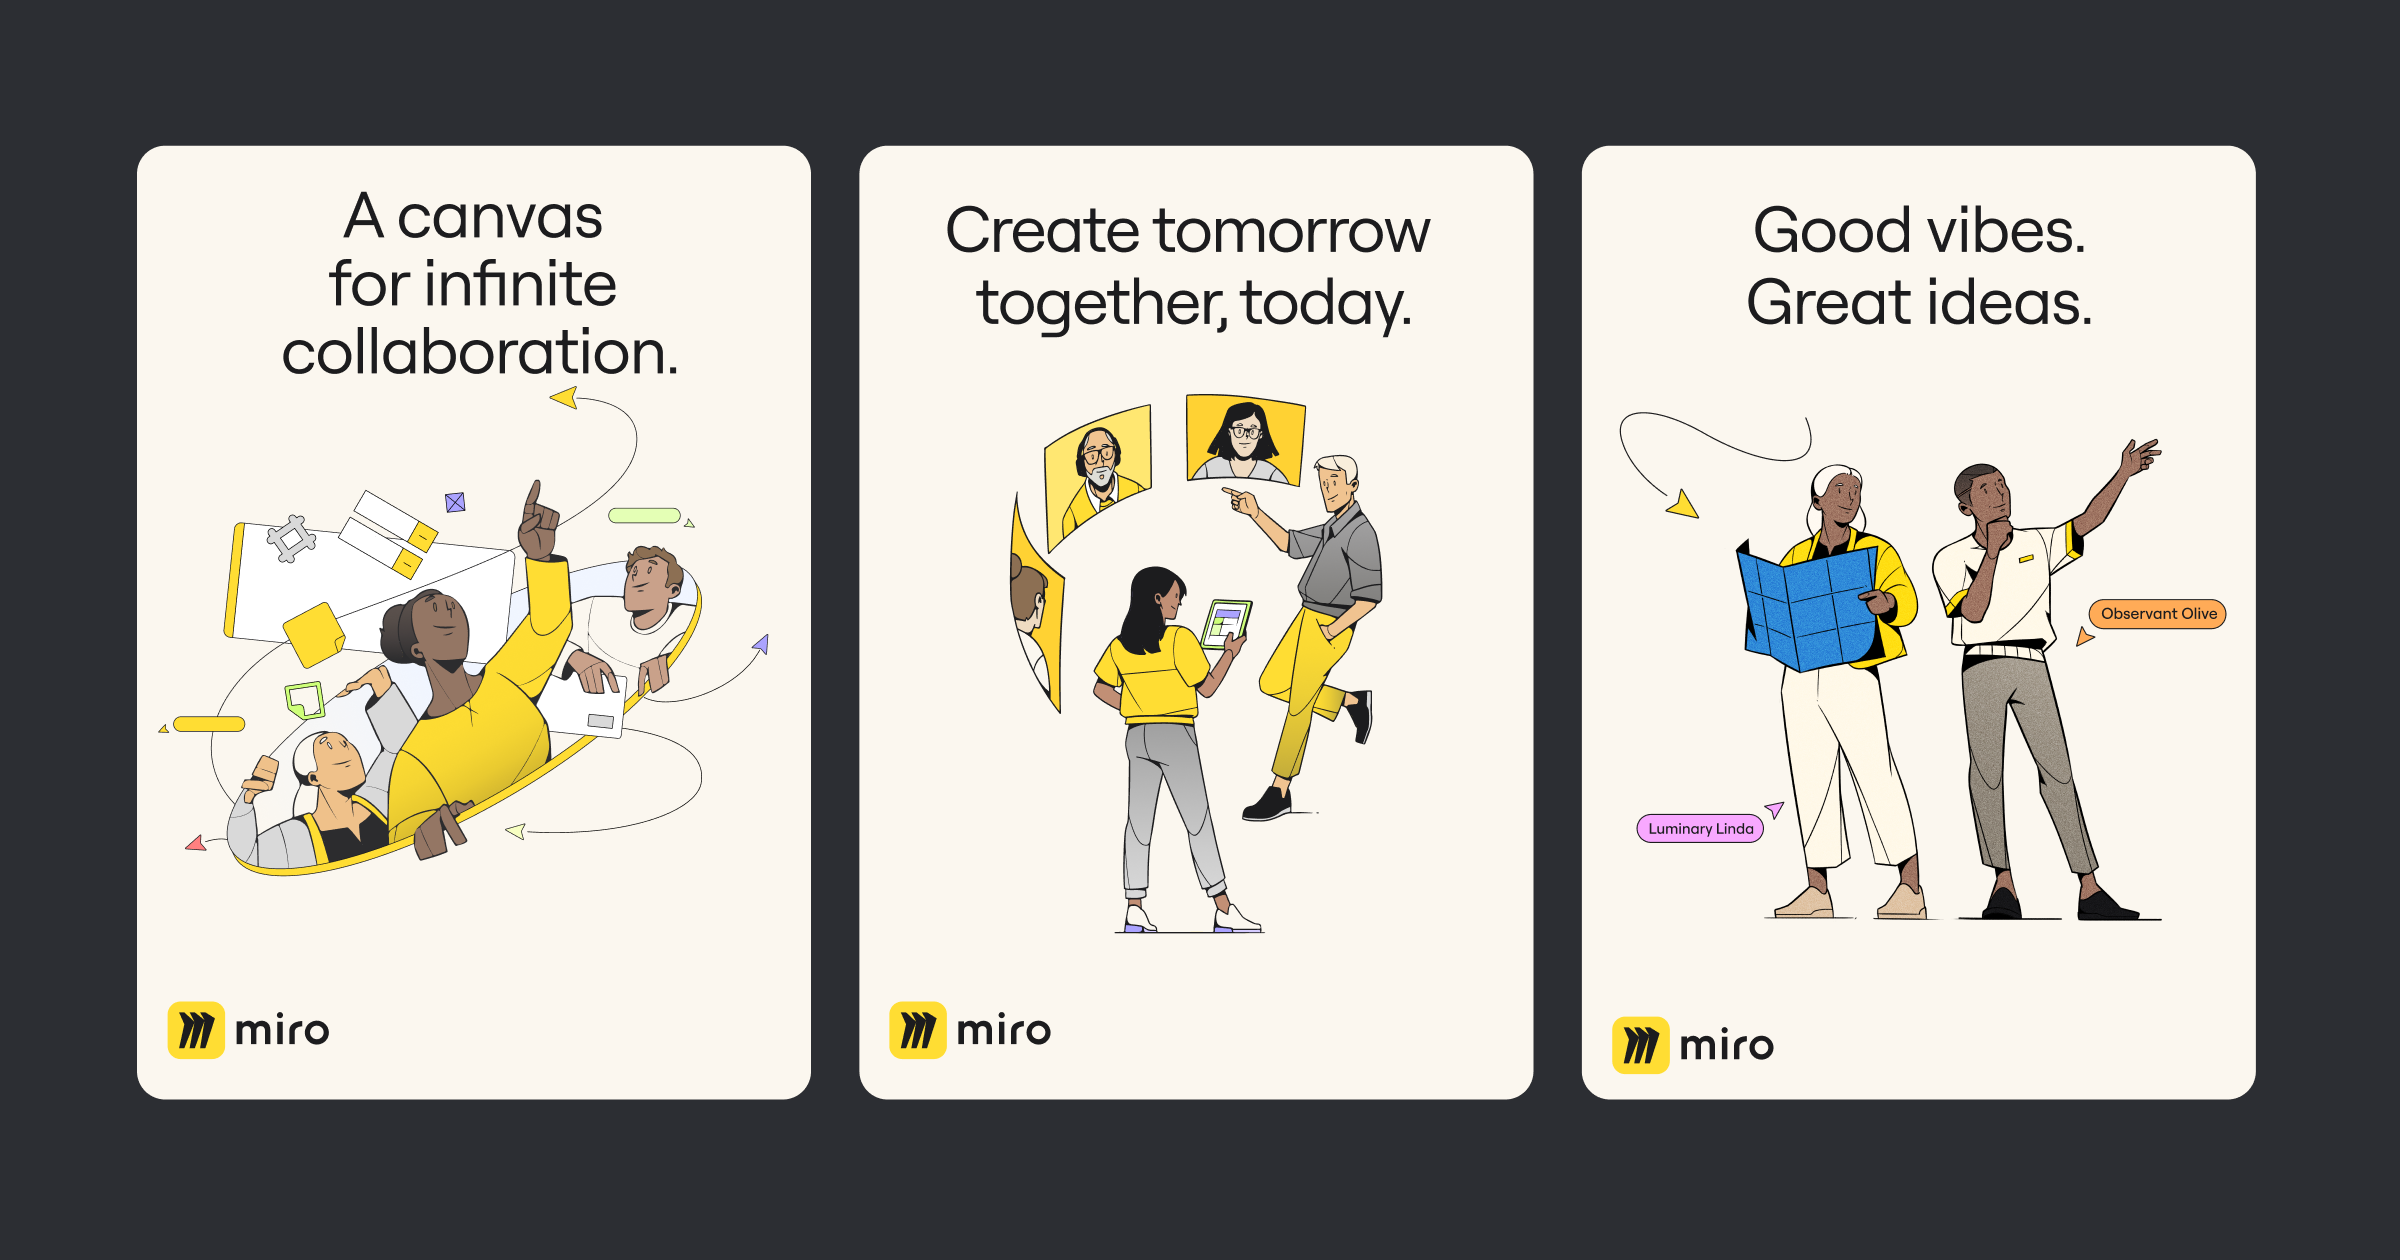 Introducing Miro's new visual identity system